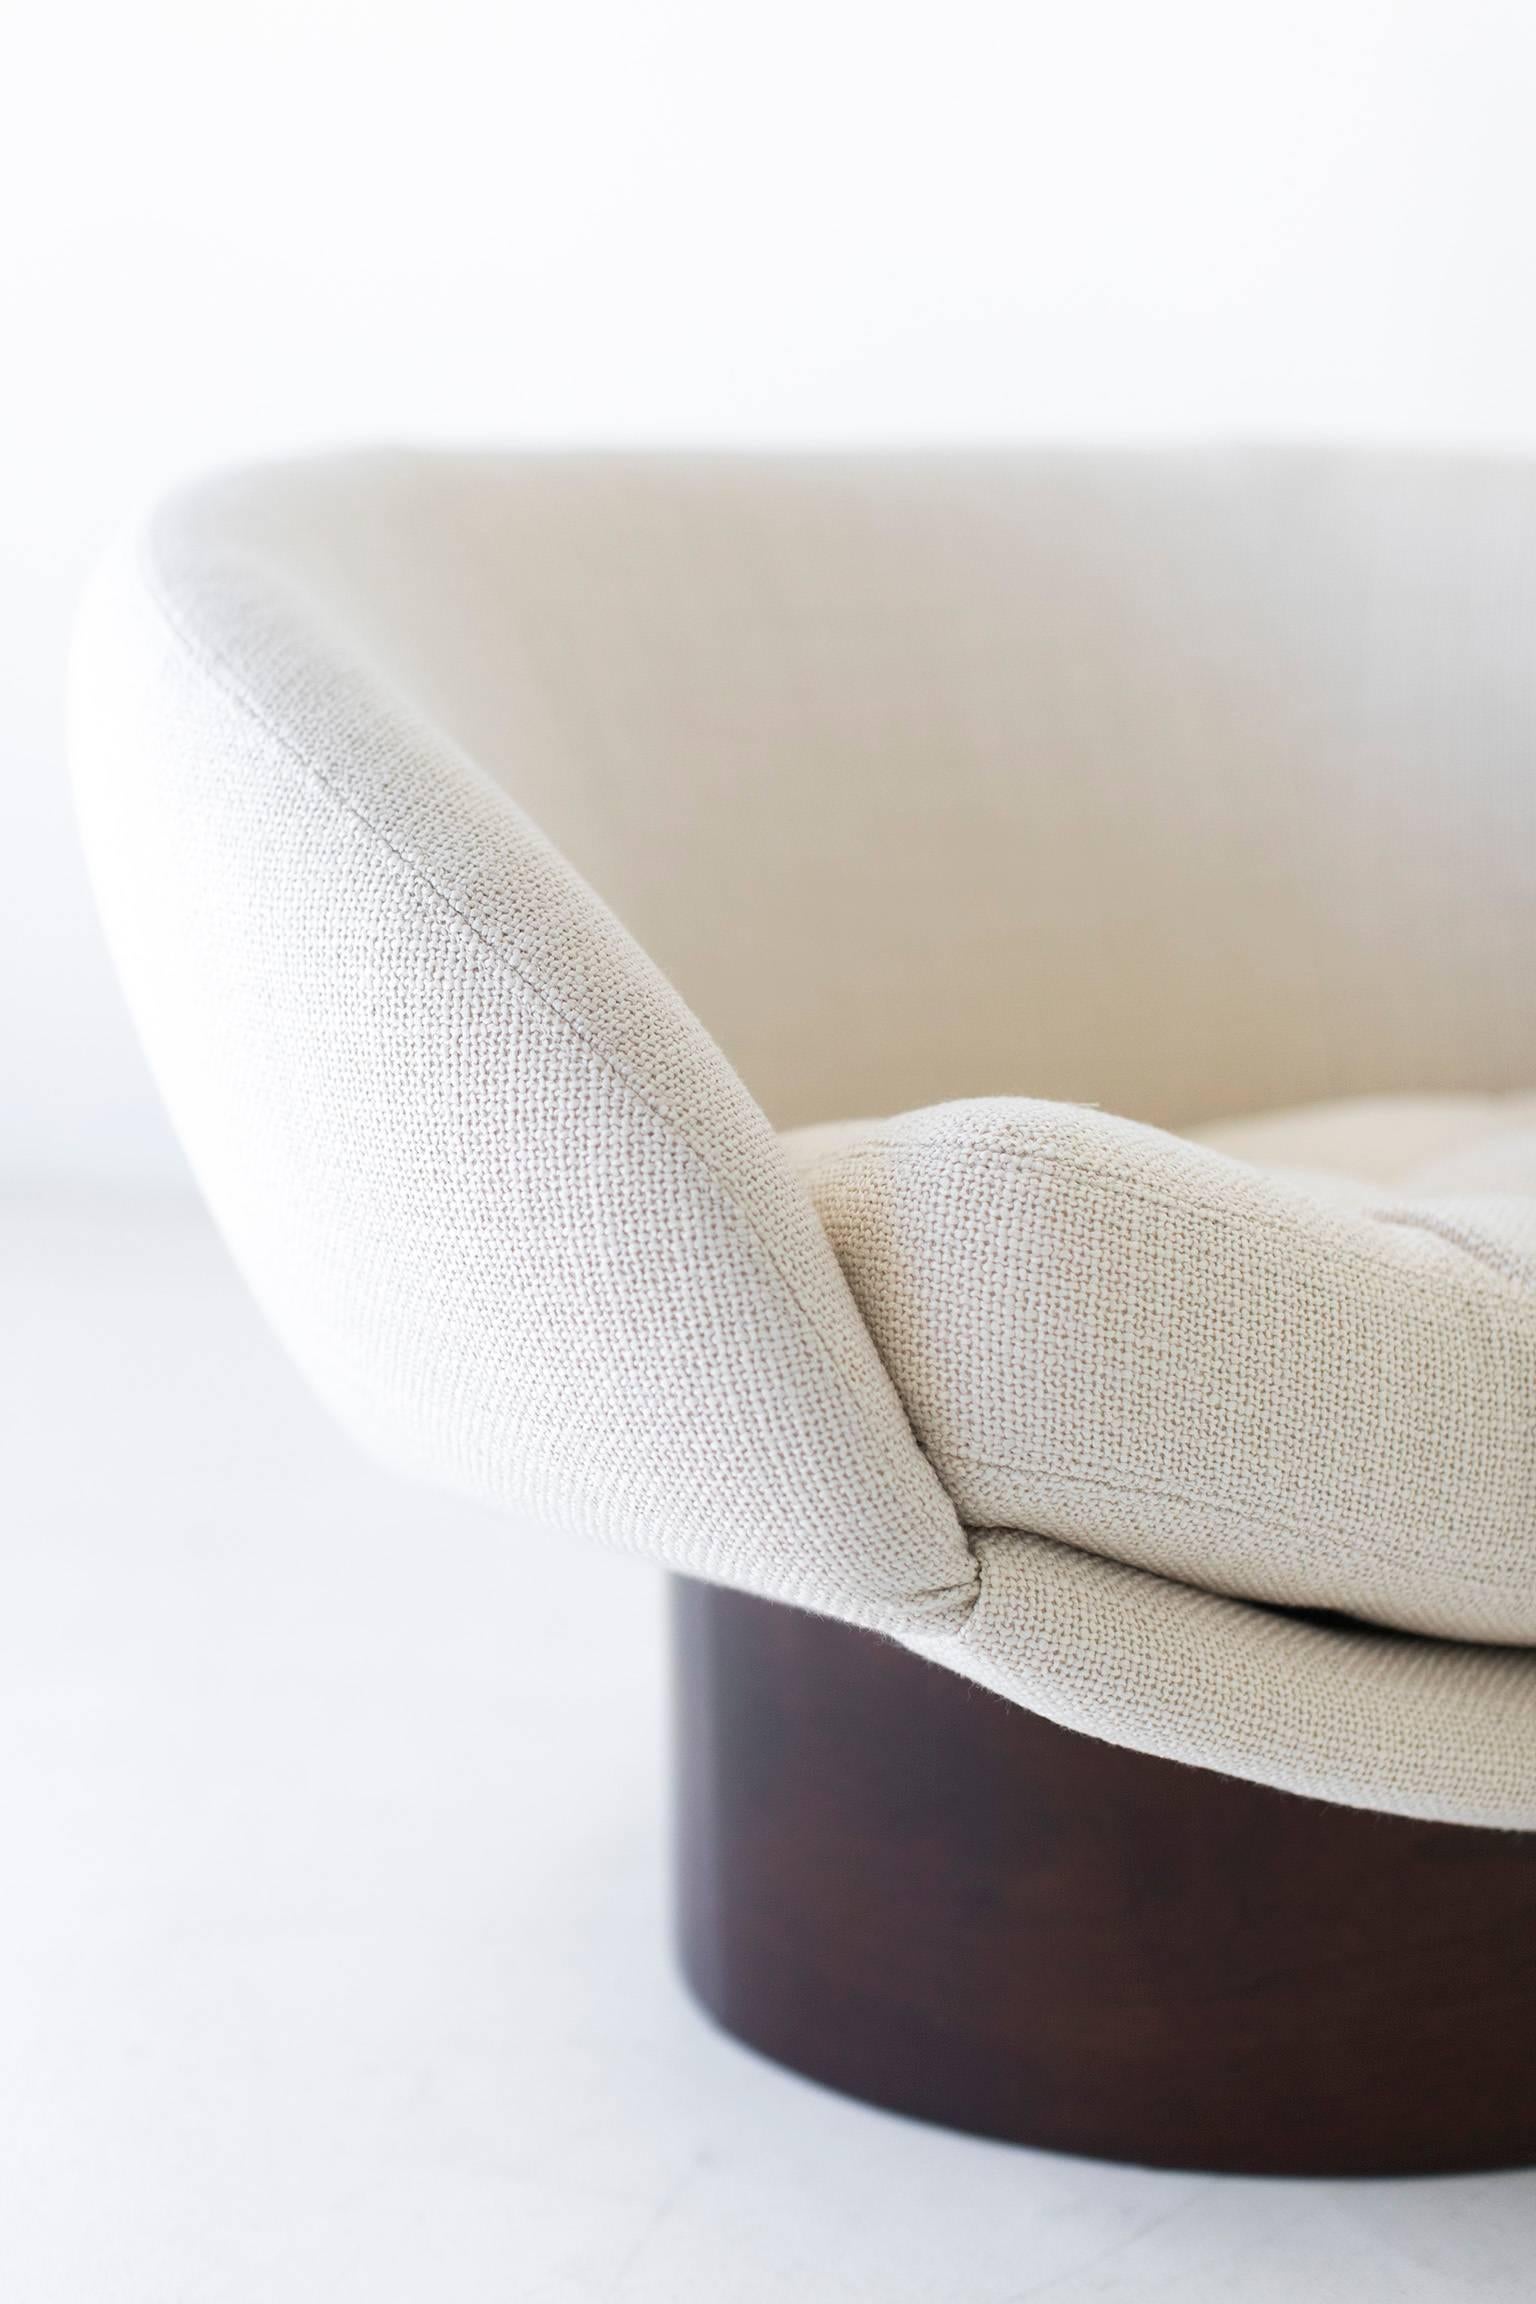 Mid-Century Modern Modern Lounge Chair